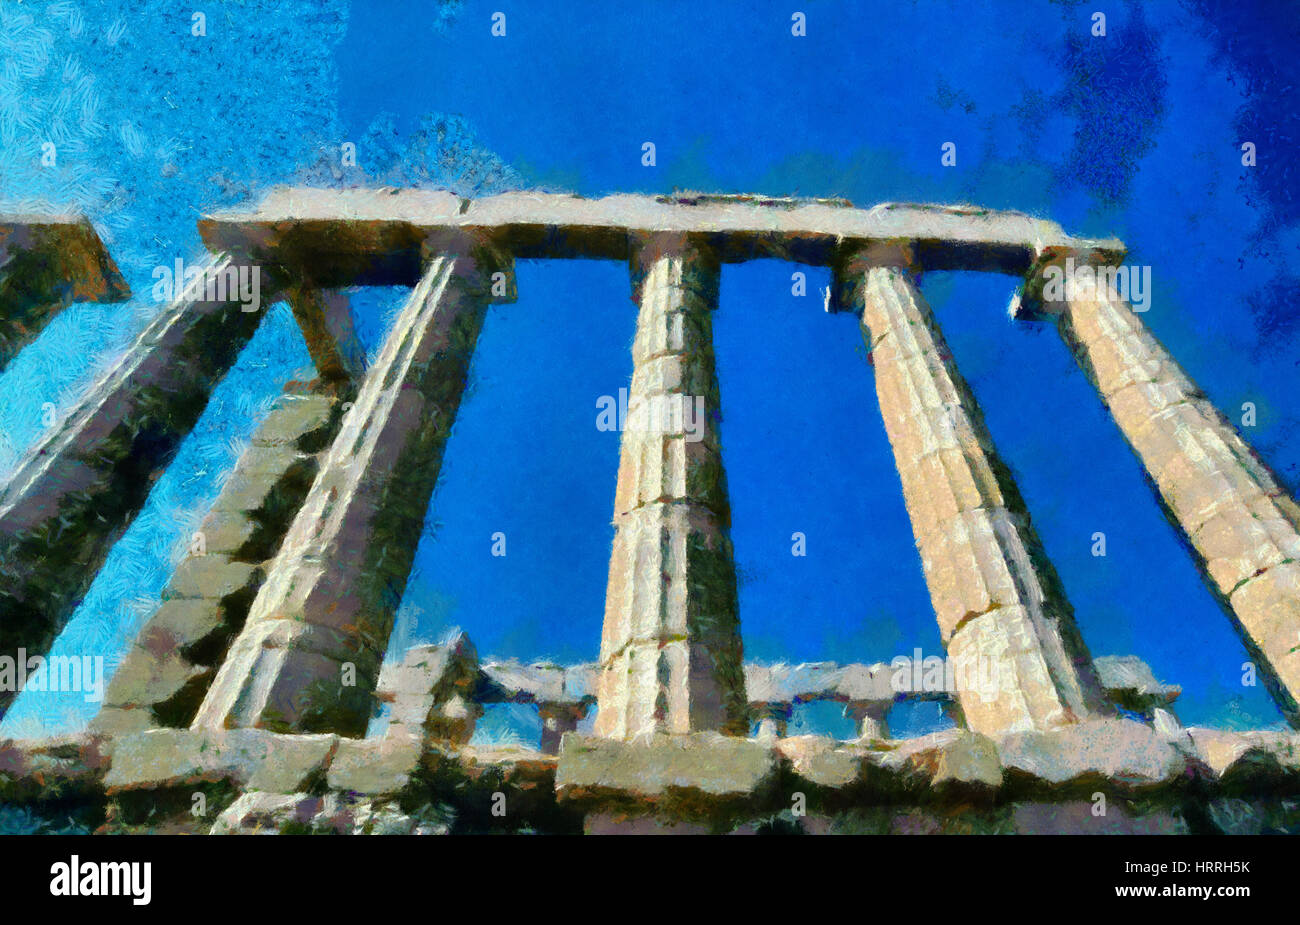 Poseidontempel in Kap Sounion, Griechenland Stockfoto